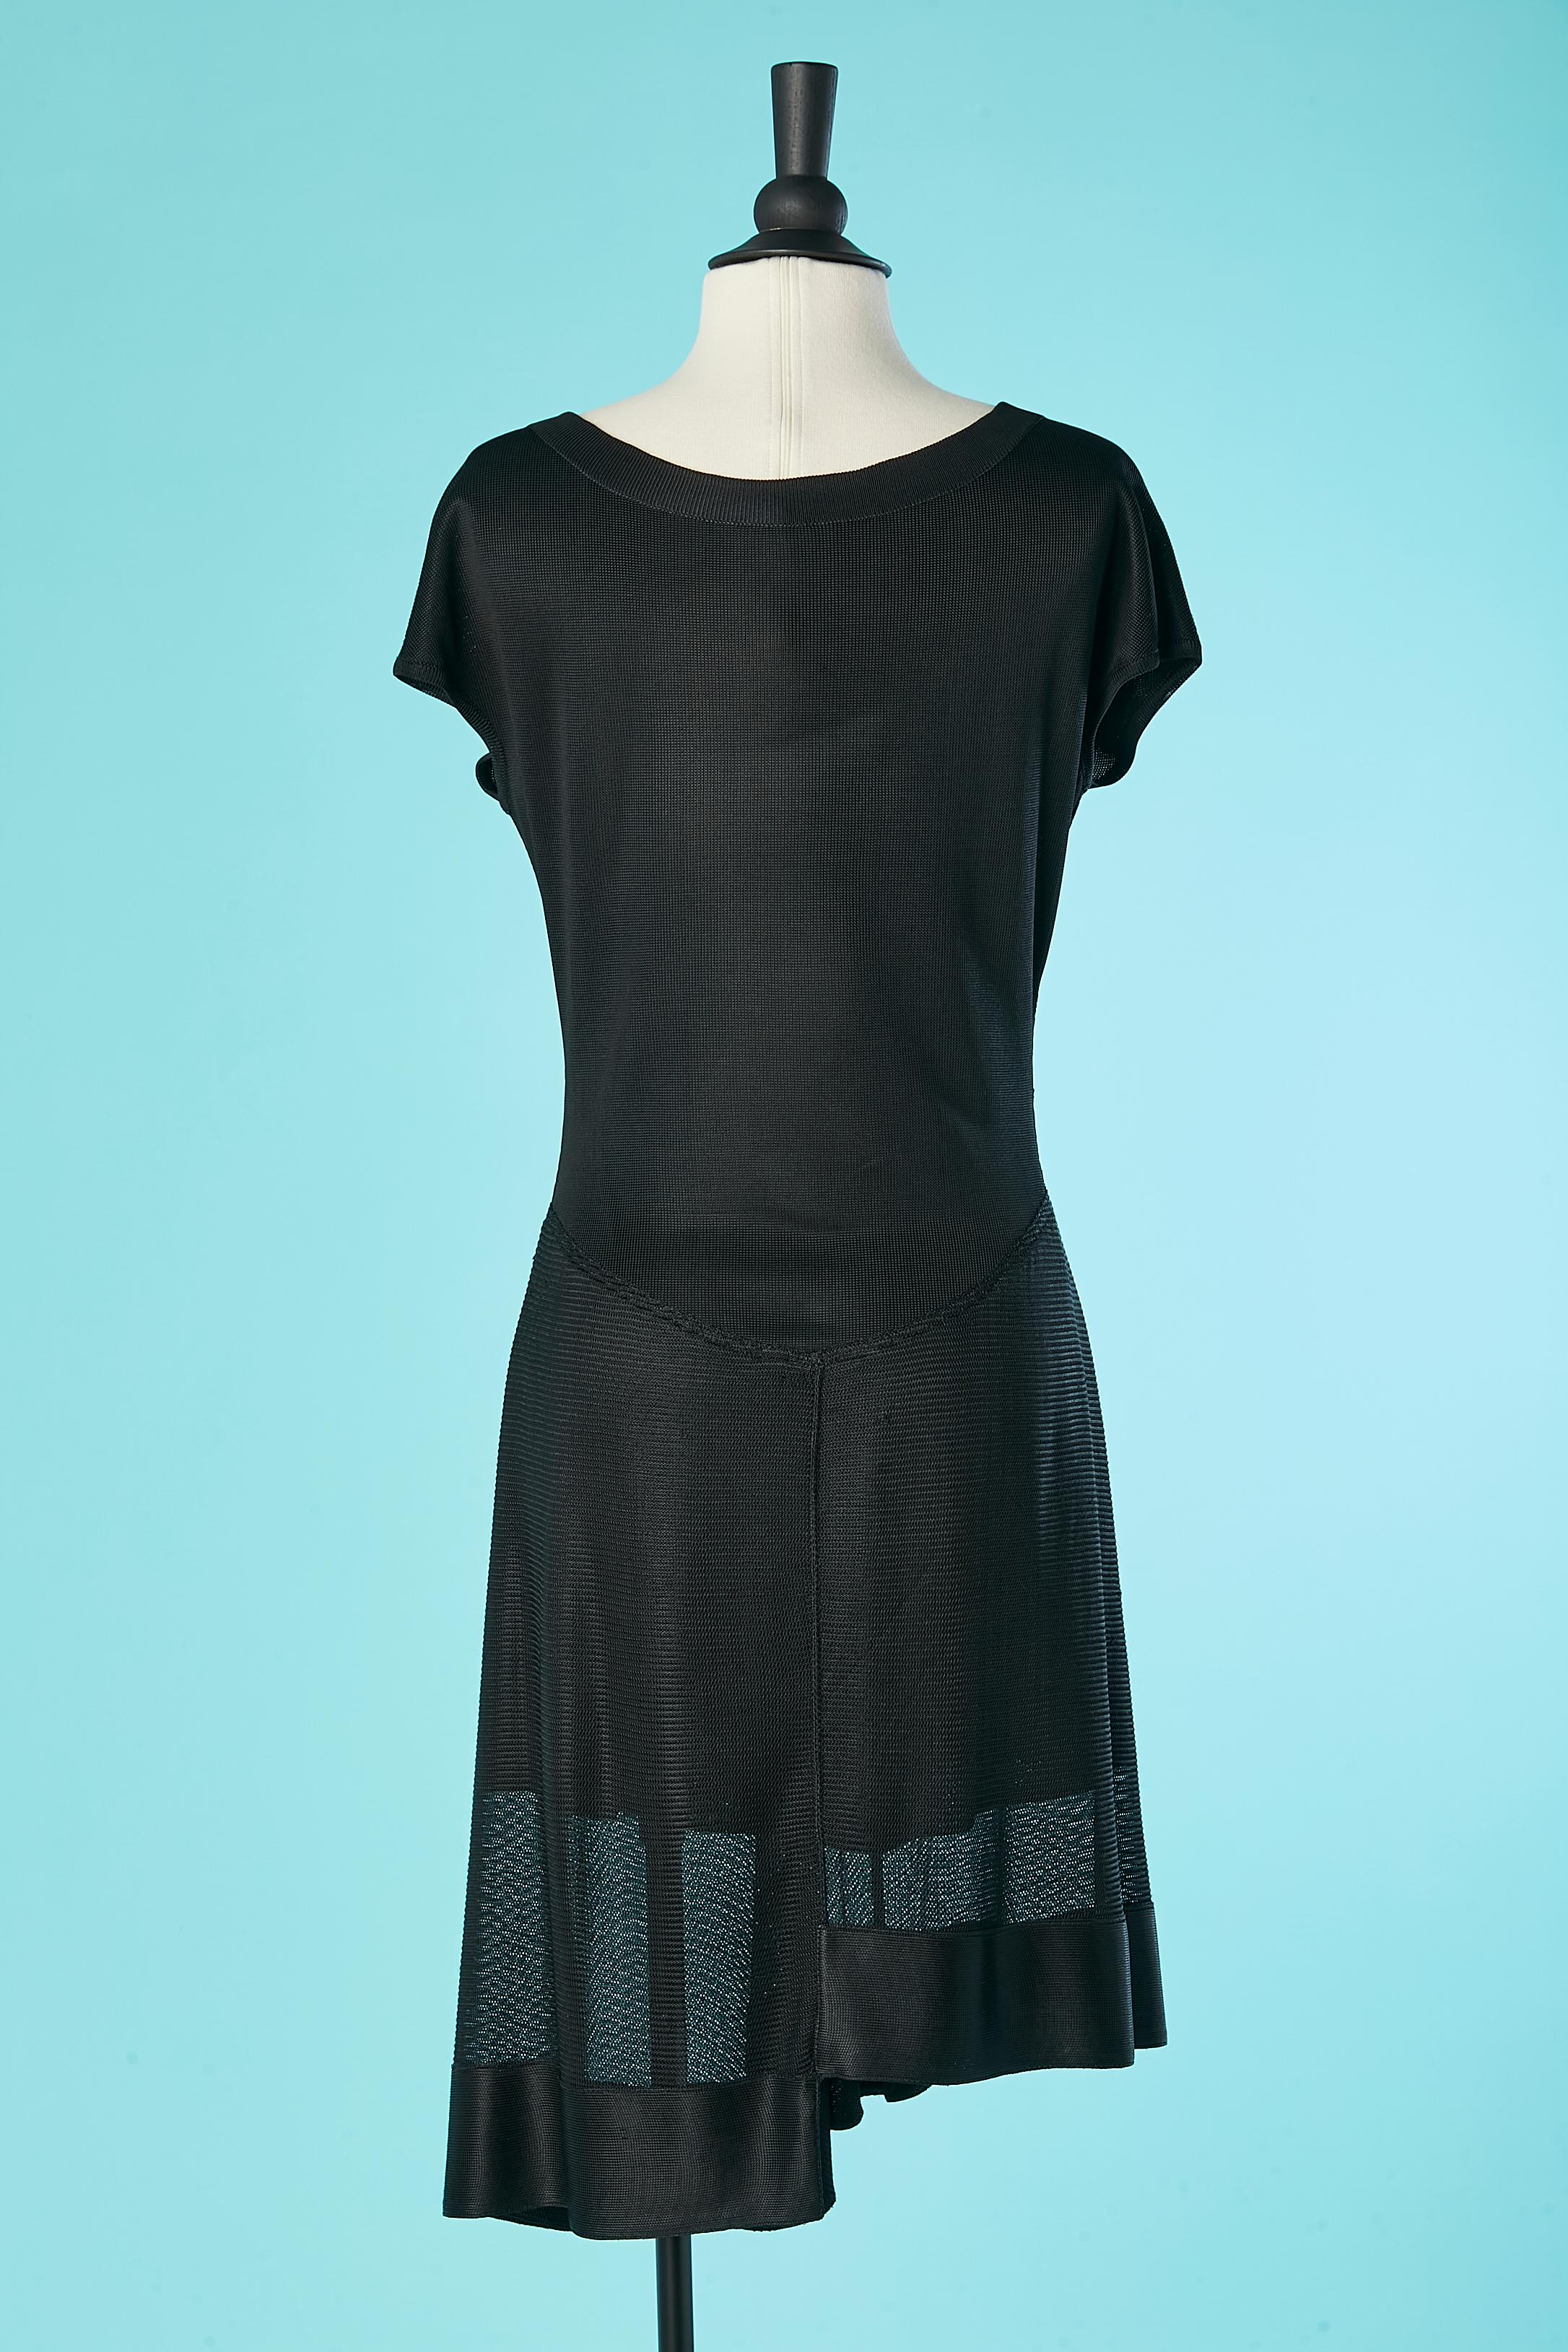 Black rayon knit cocktail dress Alaïa  For Sale 1